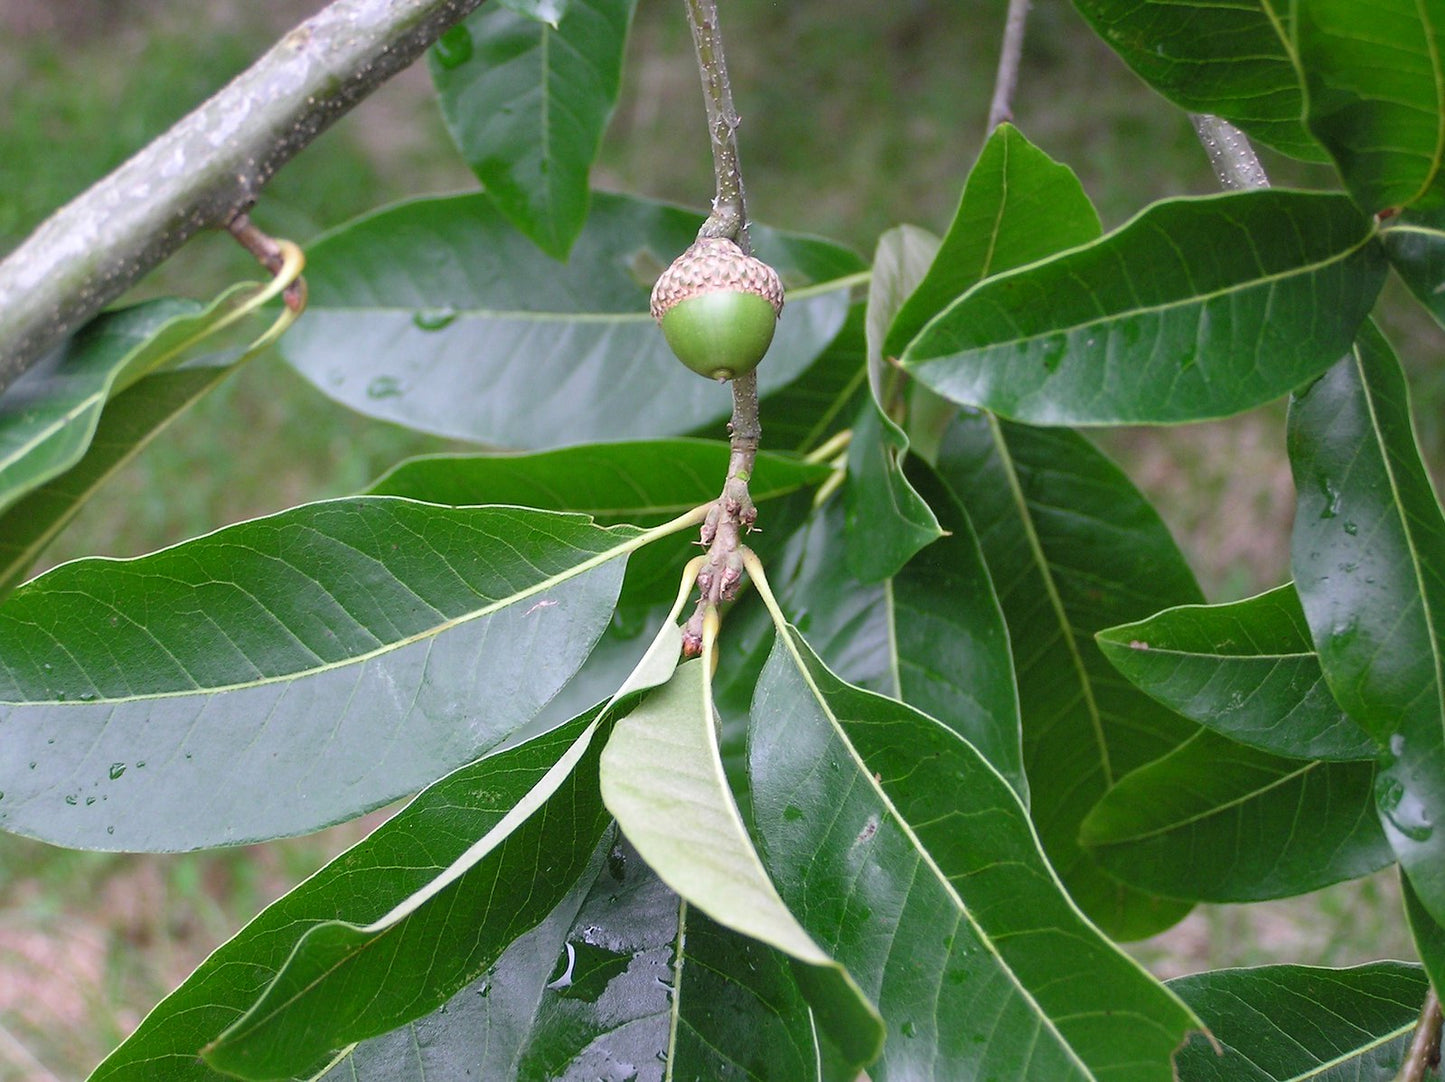 Northern Laurel Oak Shingle Oak Quercus imbricaria 20 Seeds   USA Company